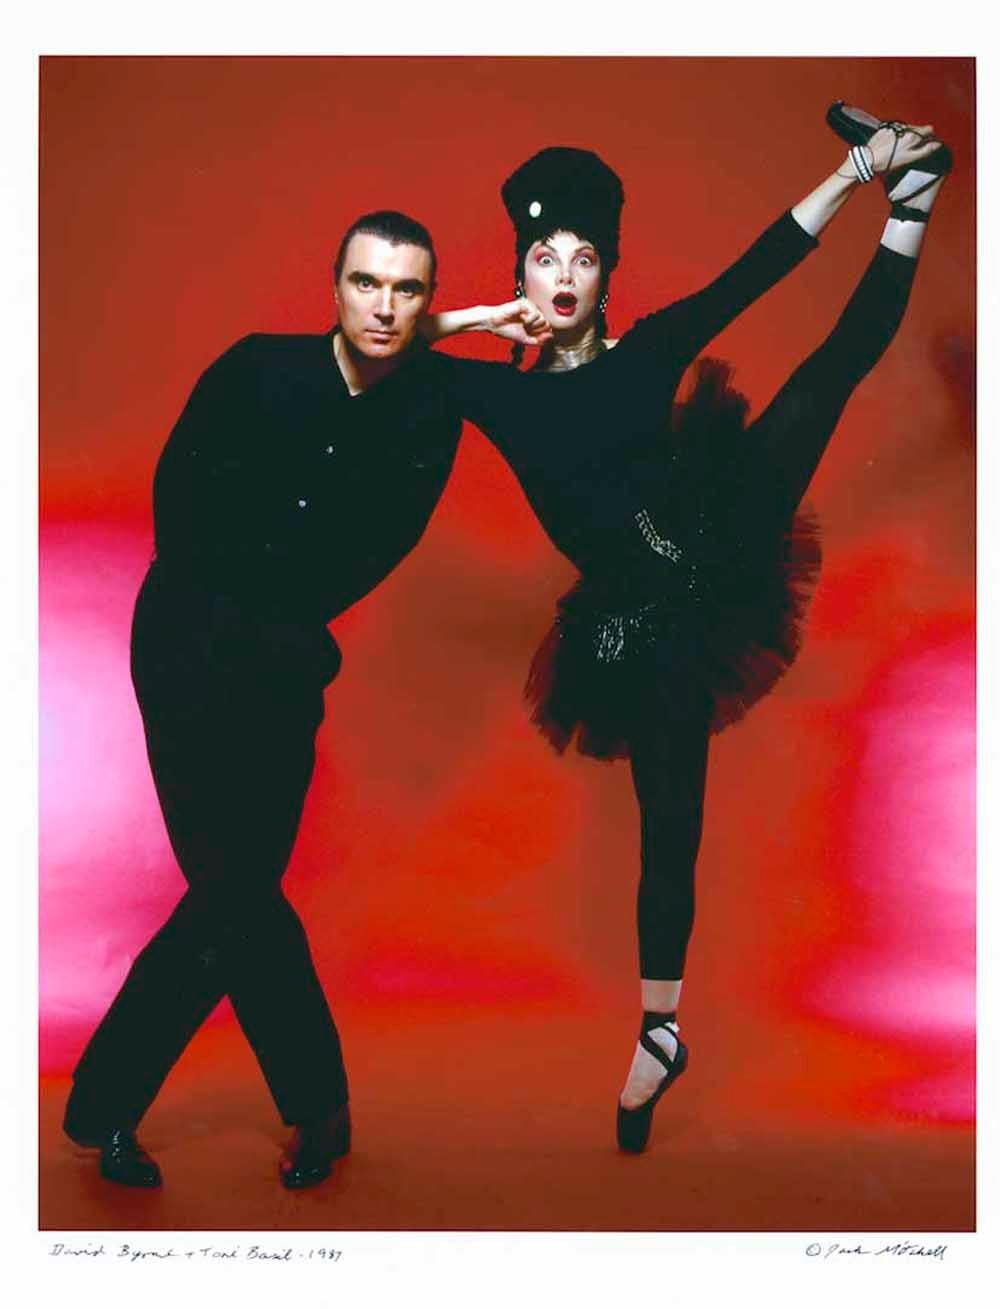 Singer/songwriter David Byrne & dancer/choreographer Toni Basil, signed by Jack